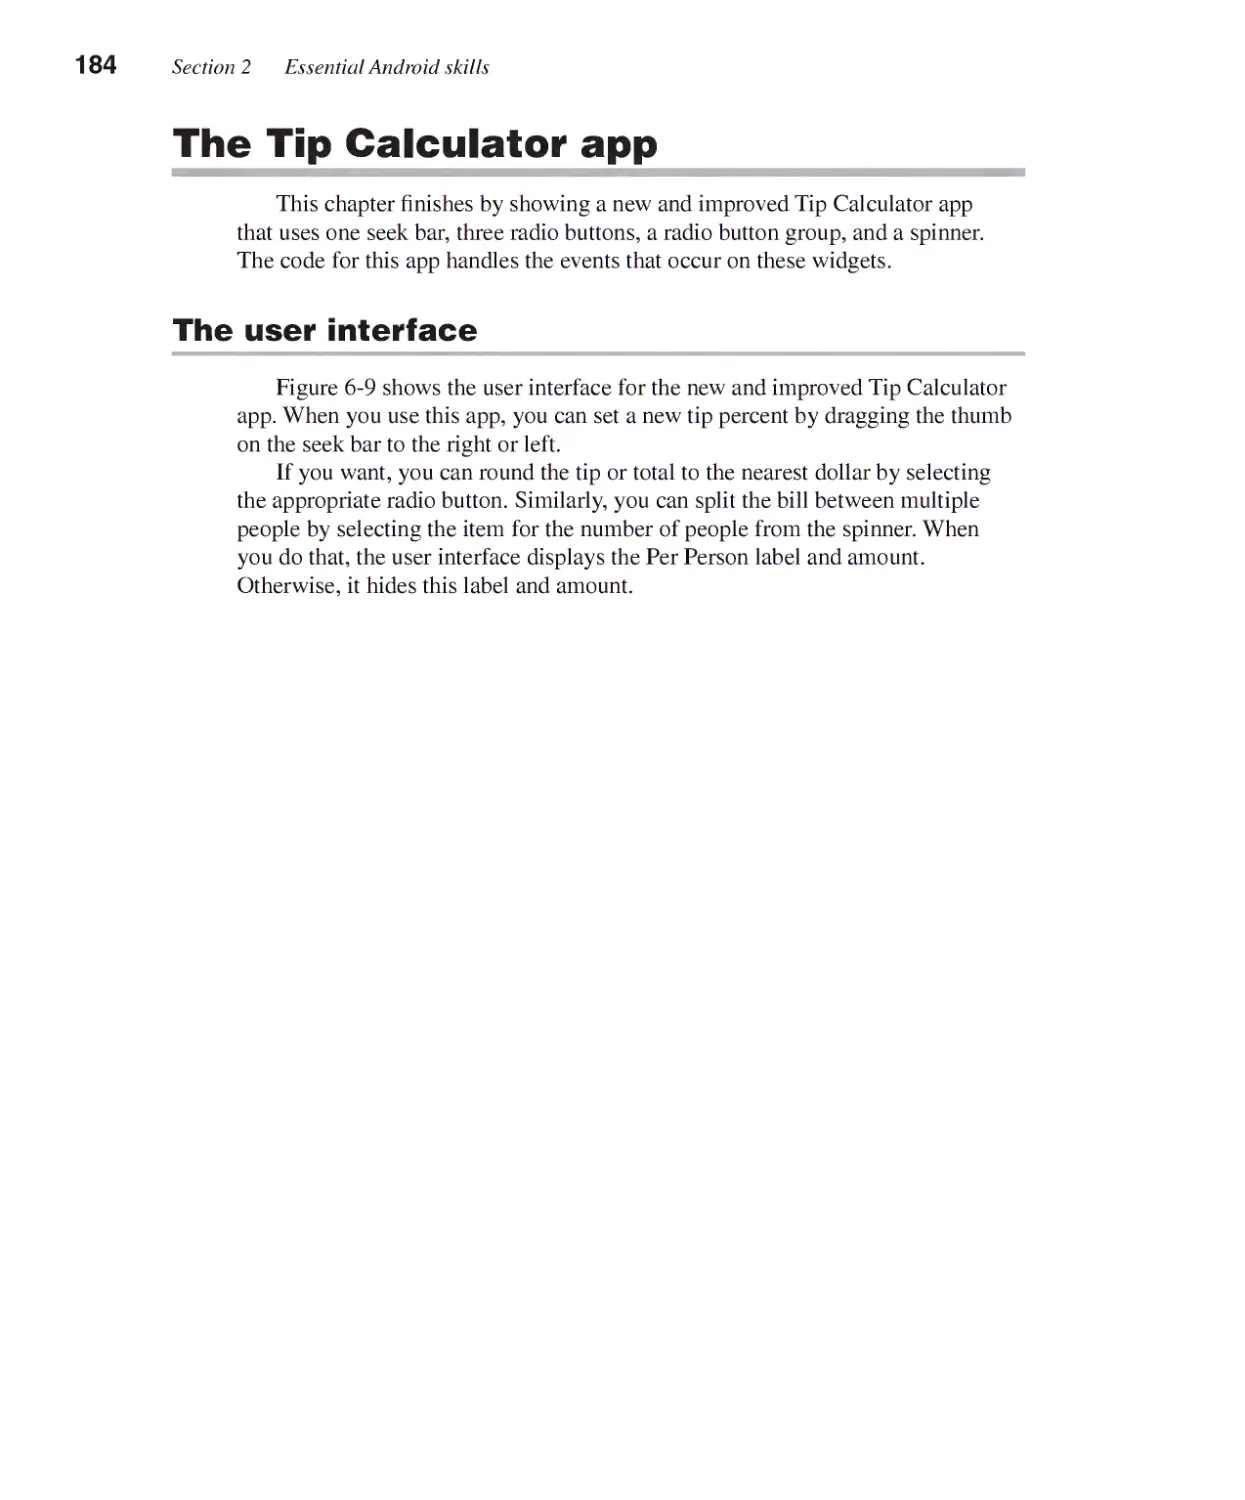 The Tip Calculator App